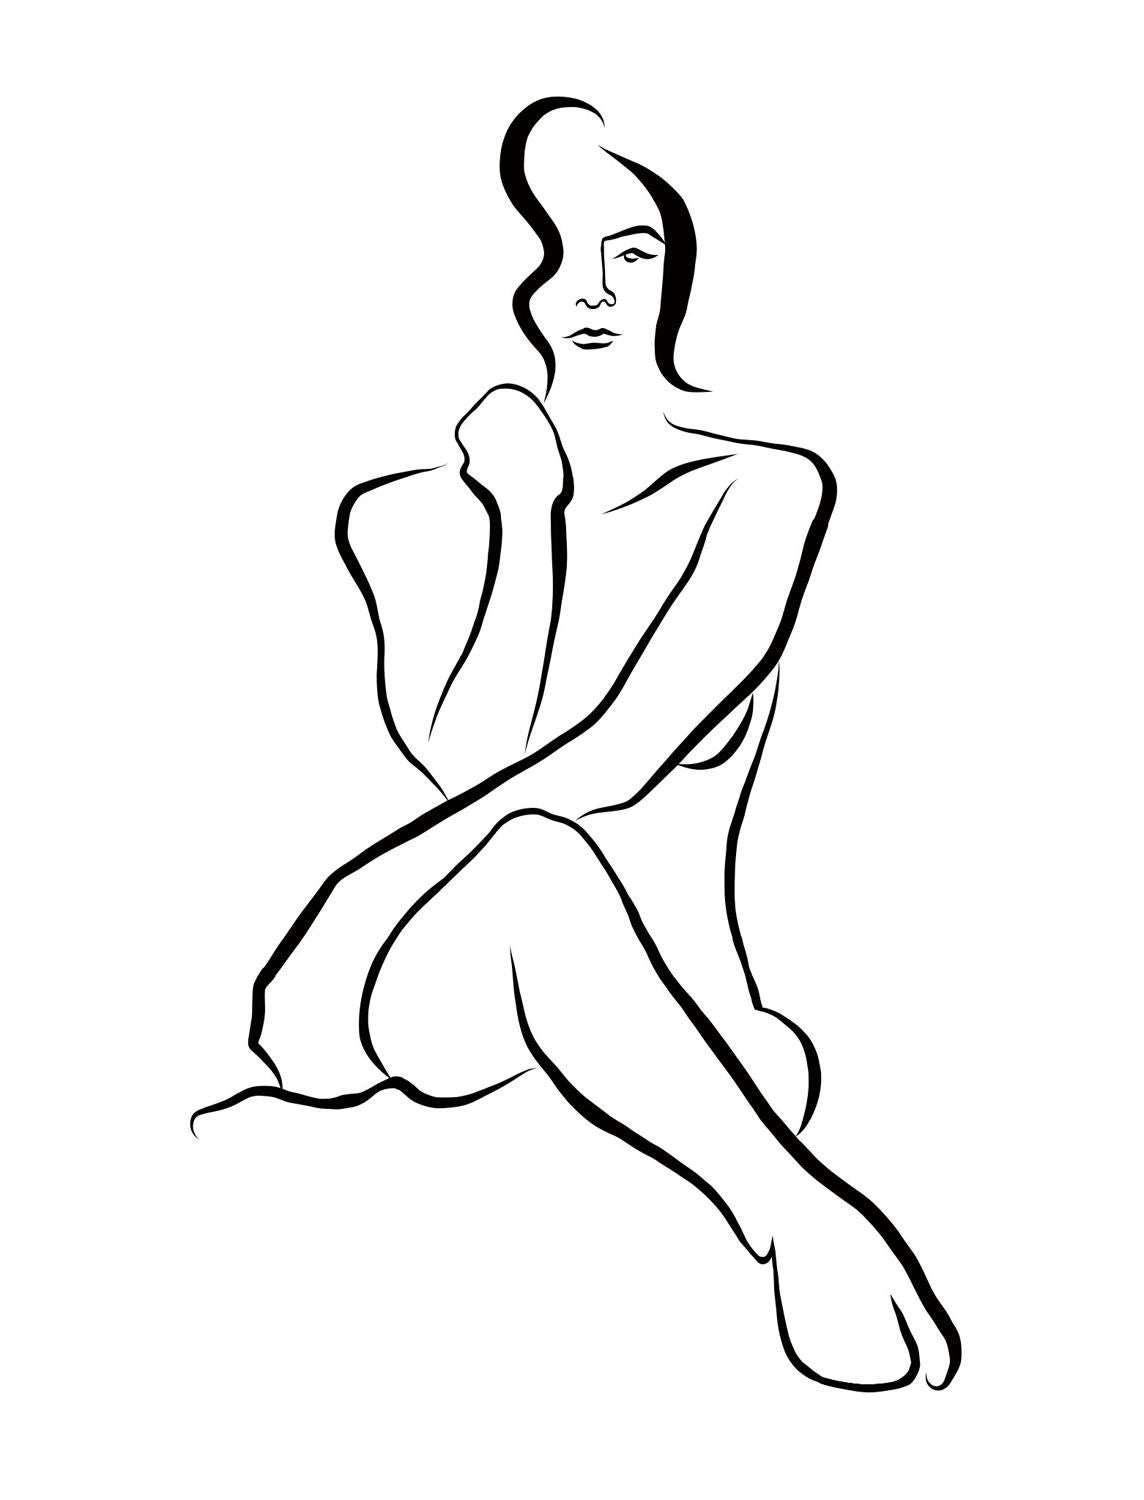 Michael Binkley Nude Print - Haiku #22, 5/50 - Digital Vector Drawing Seated Female Nude Woman Figure Face